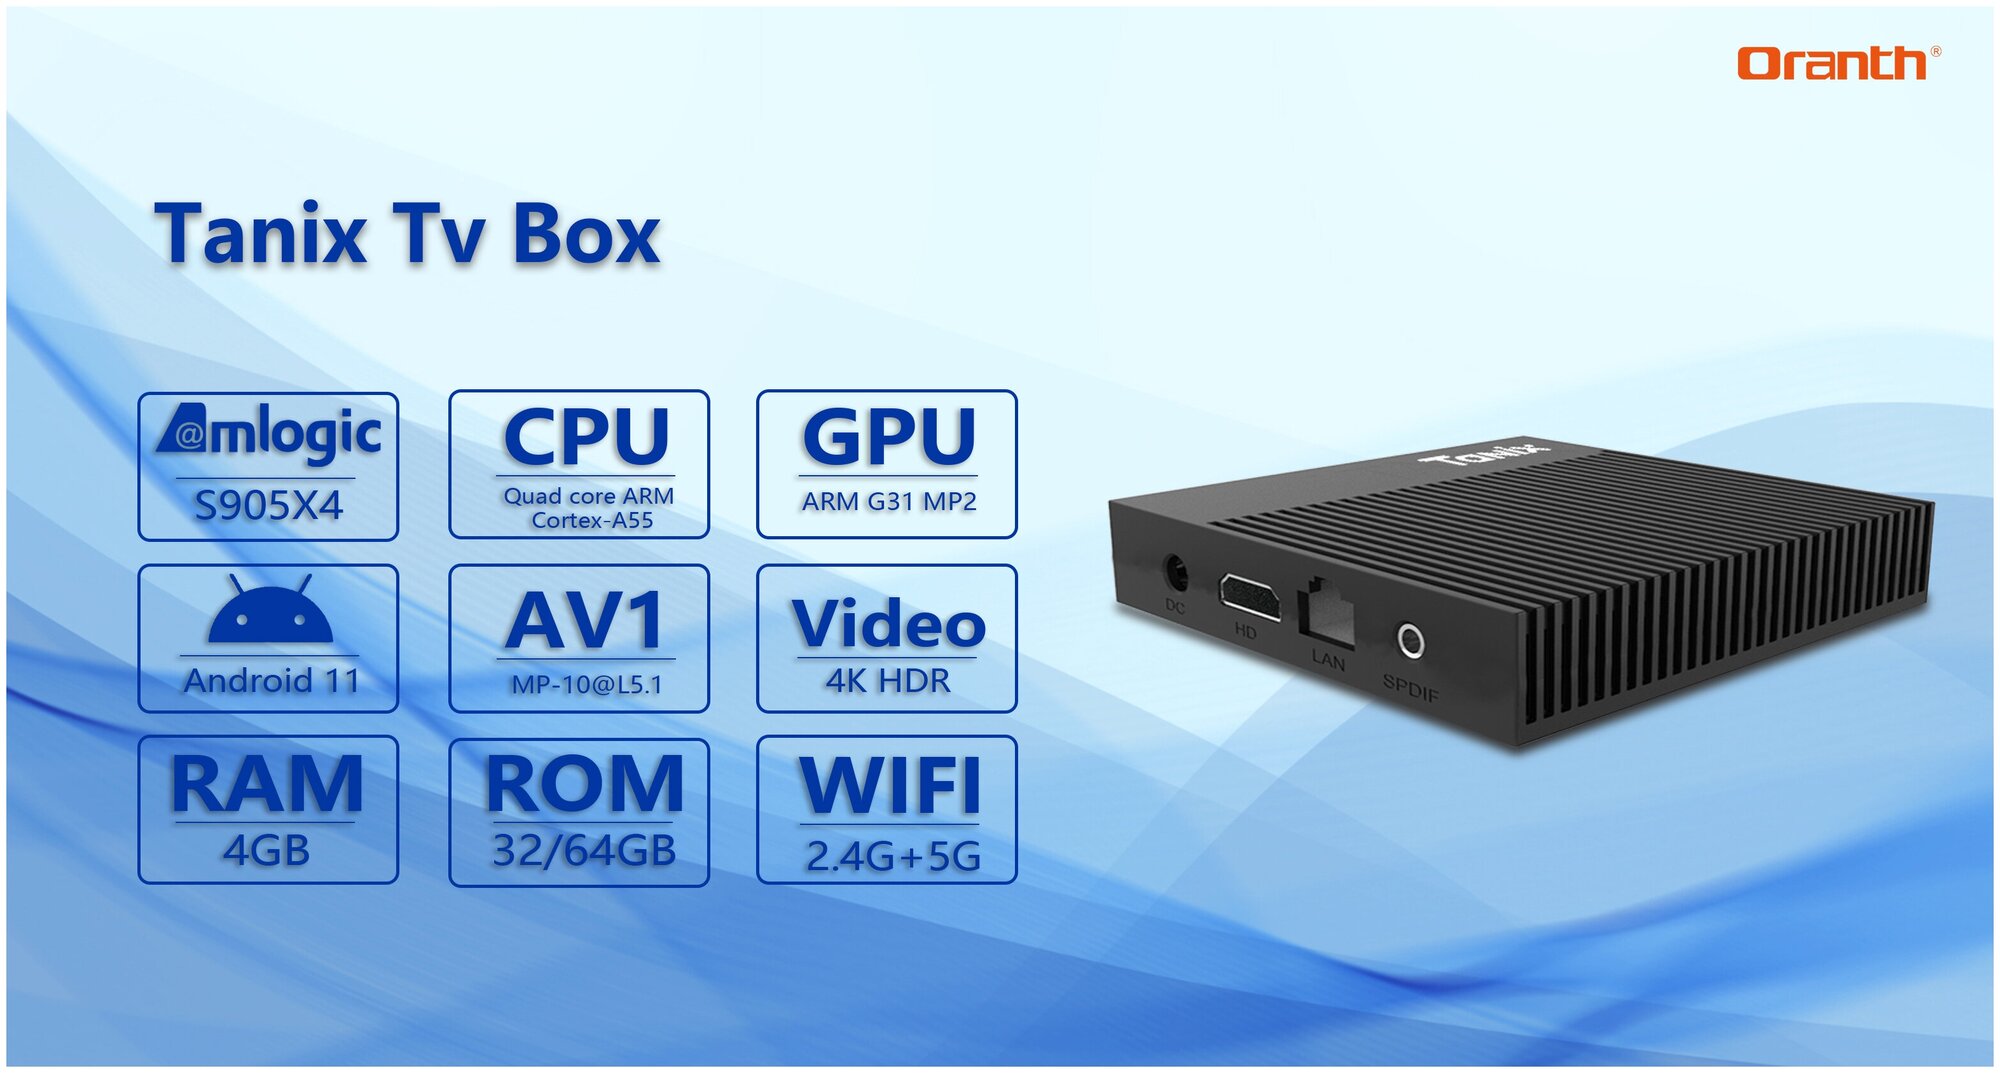 Смарт ТВ приставка Tanix X4 4/64 Гб Amlogic S 905 X4 Android 11 Кодек AV1 Smart TV Box UHD 4K Media Player NEW 2022